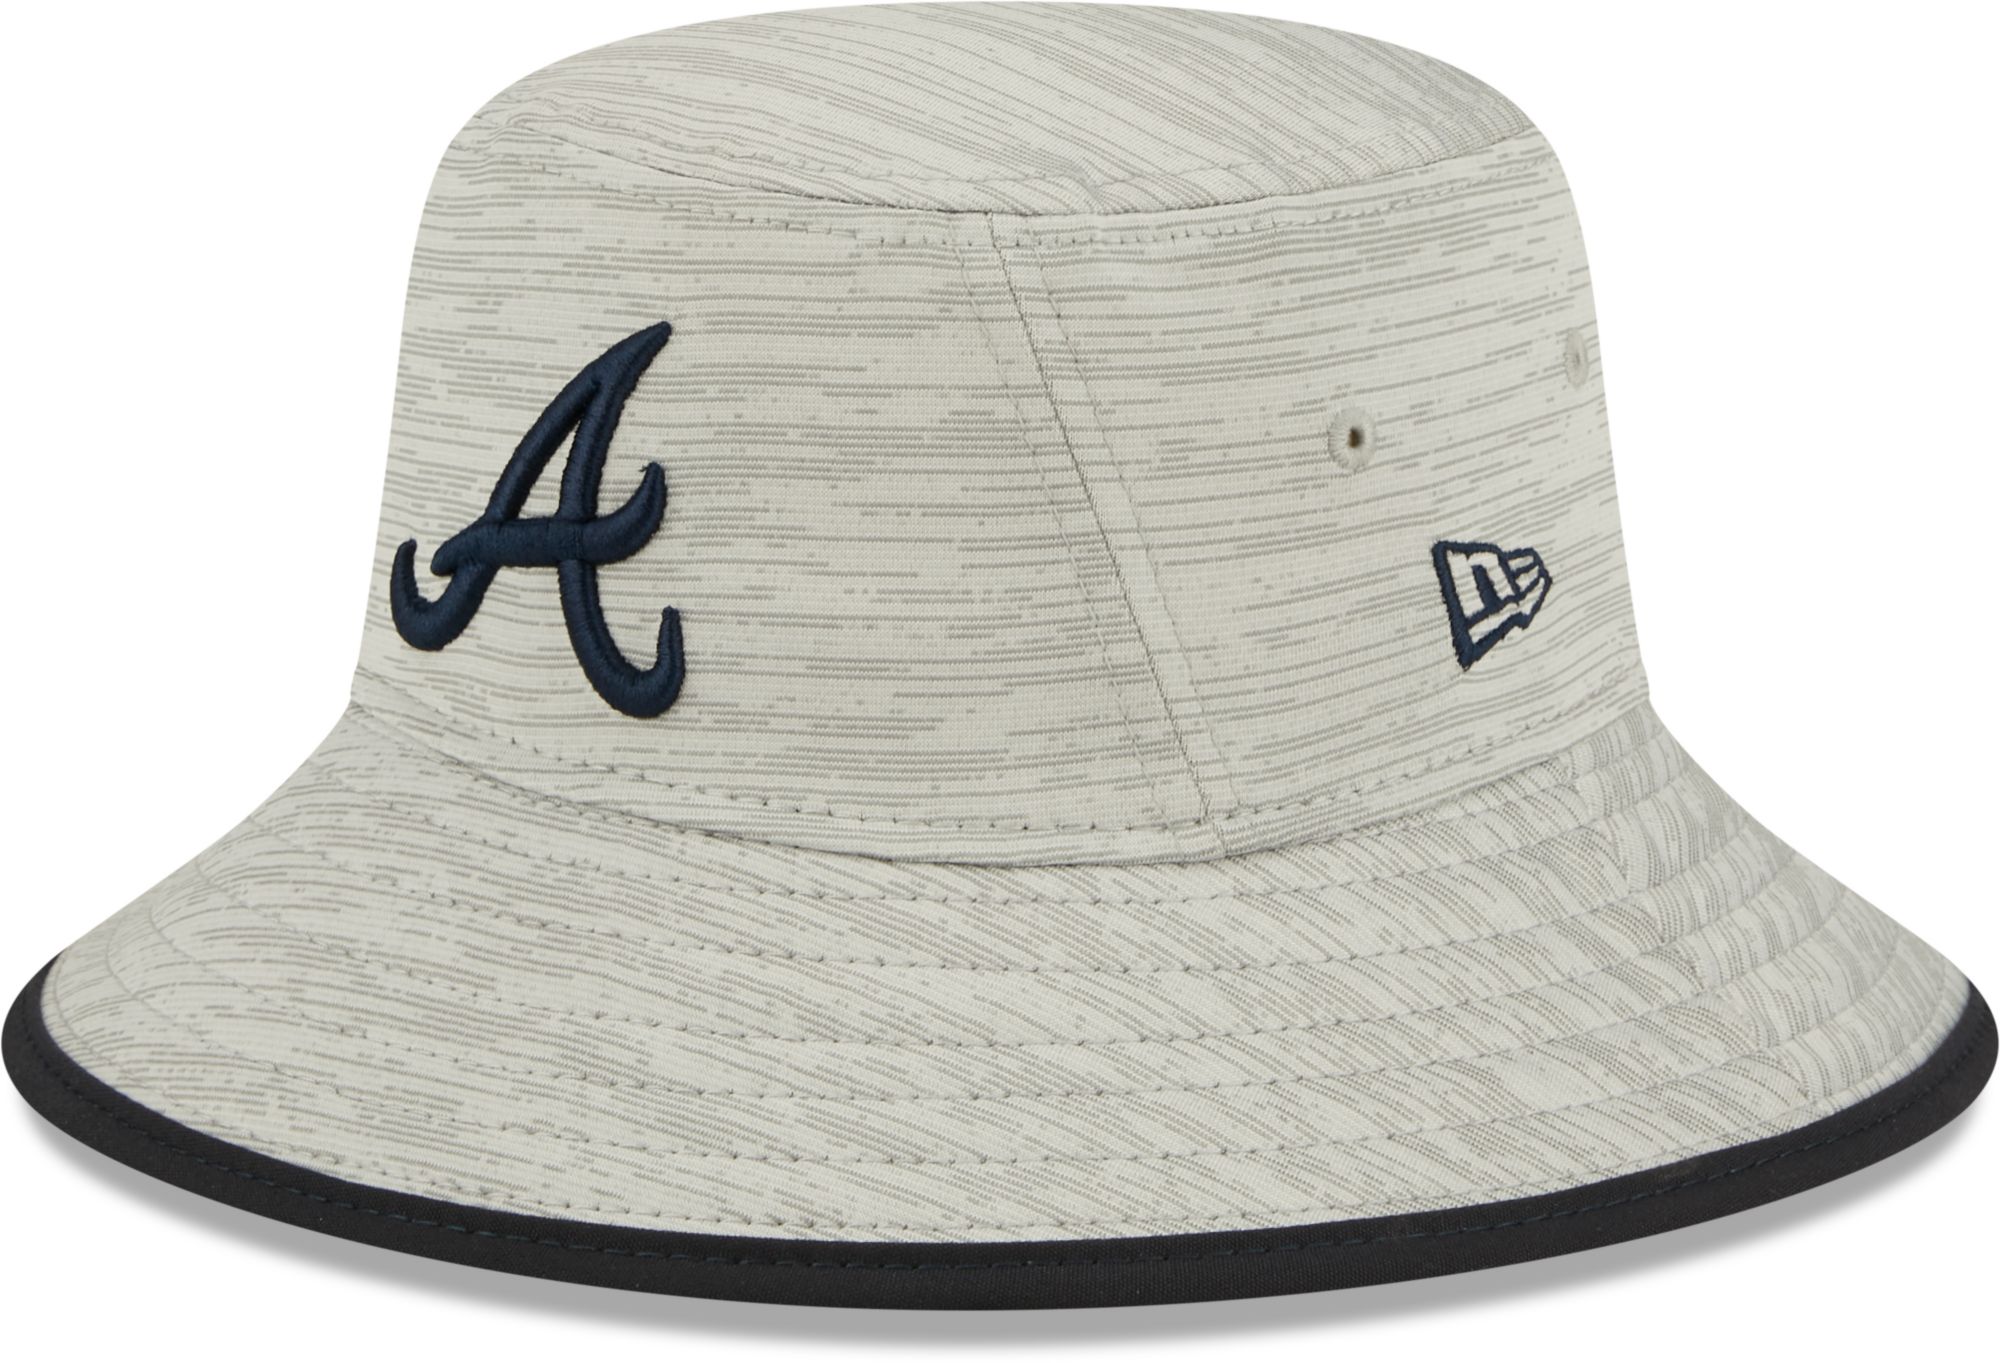 Atlanta Braves Team Script New Era Snapback Hat